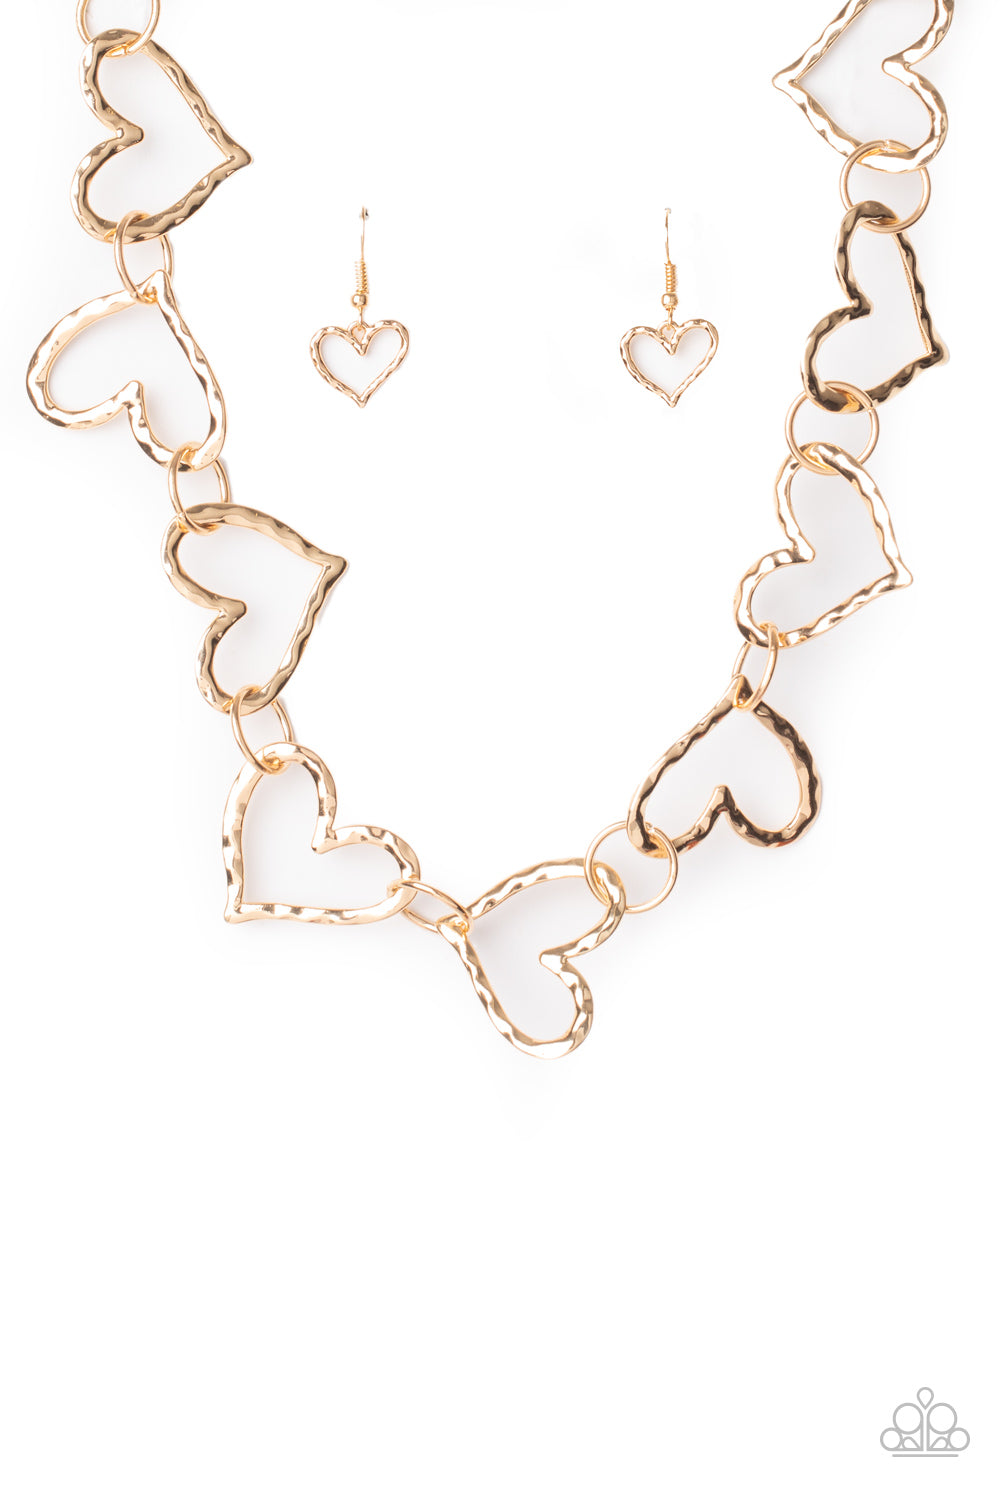 Vintagely Valentine Gold Necklace